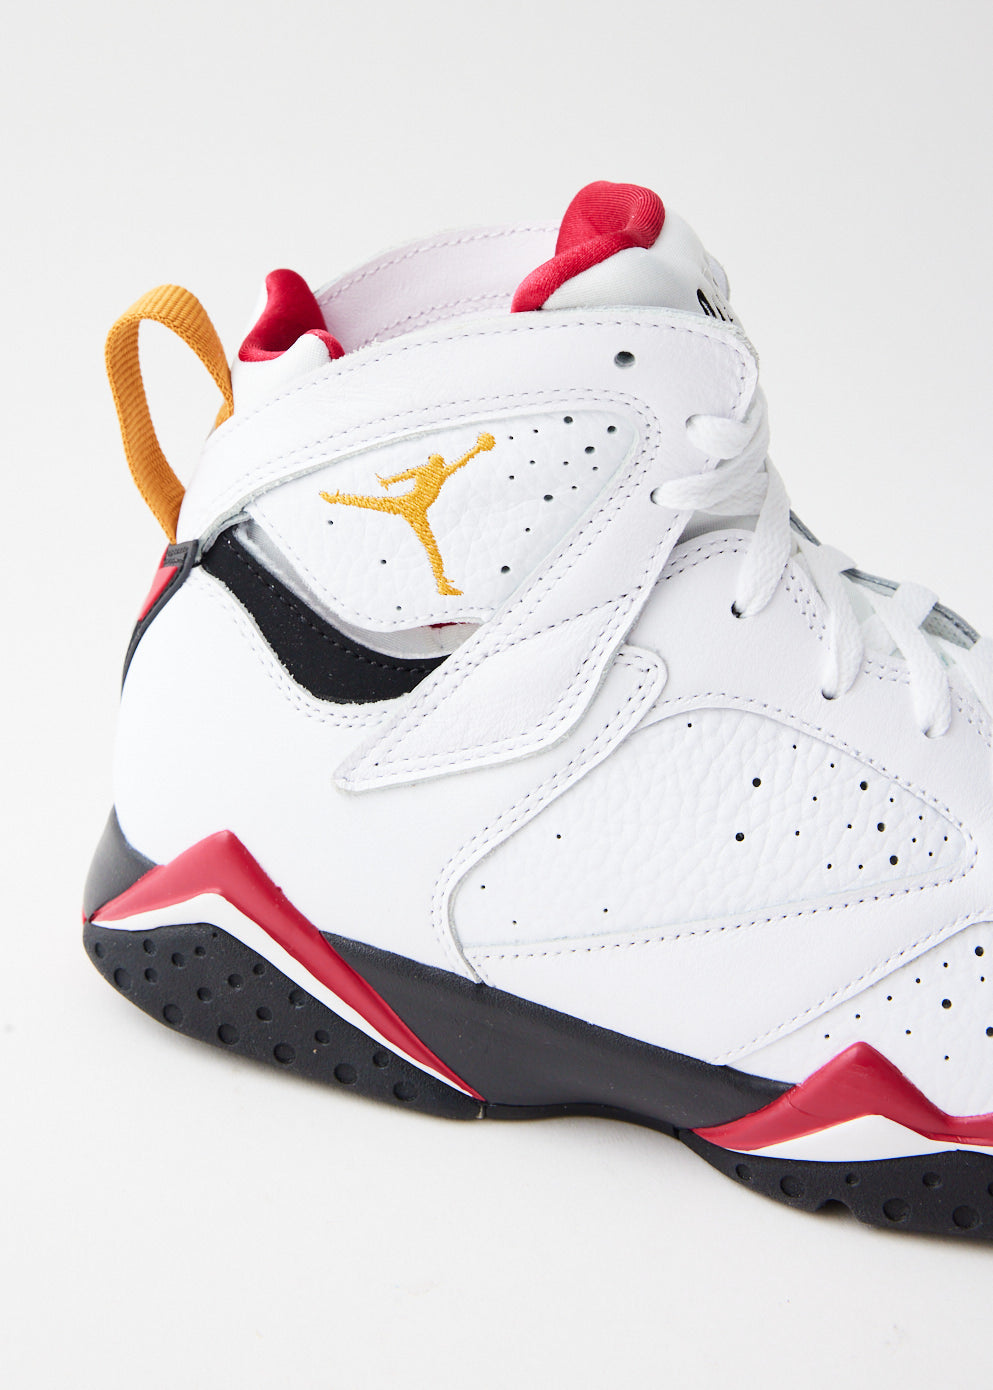 Air Jordan 7 Retro 'Cardinal' Sneakers